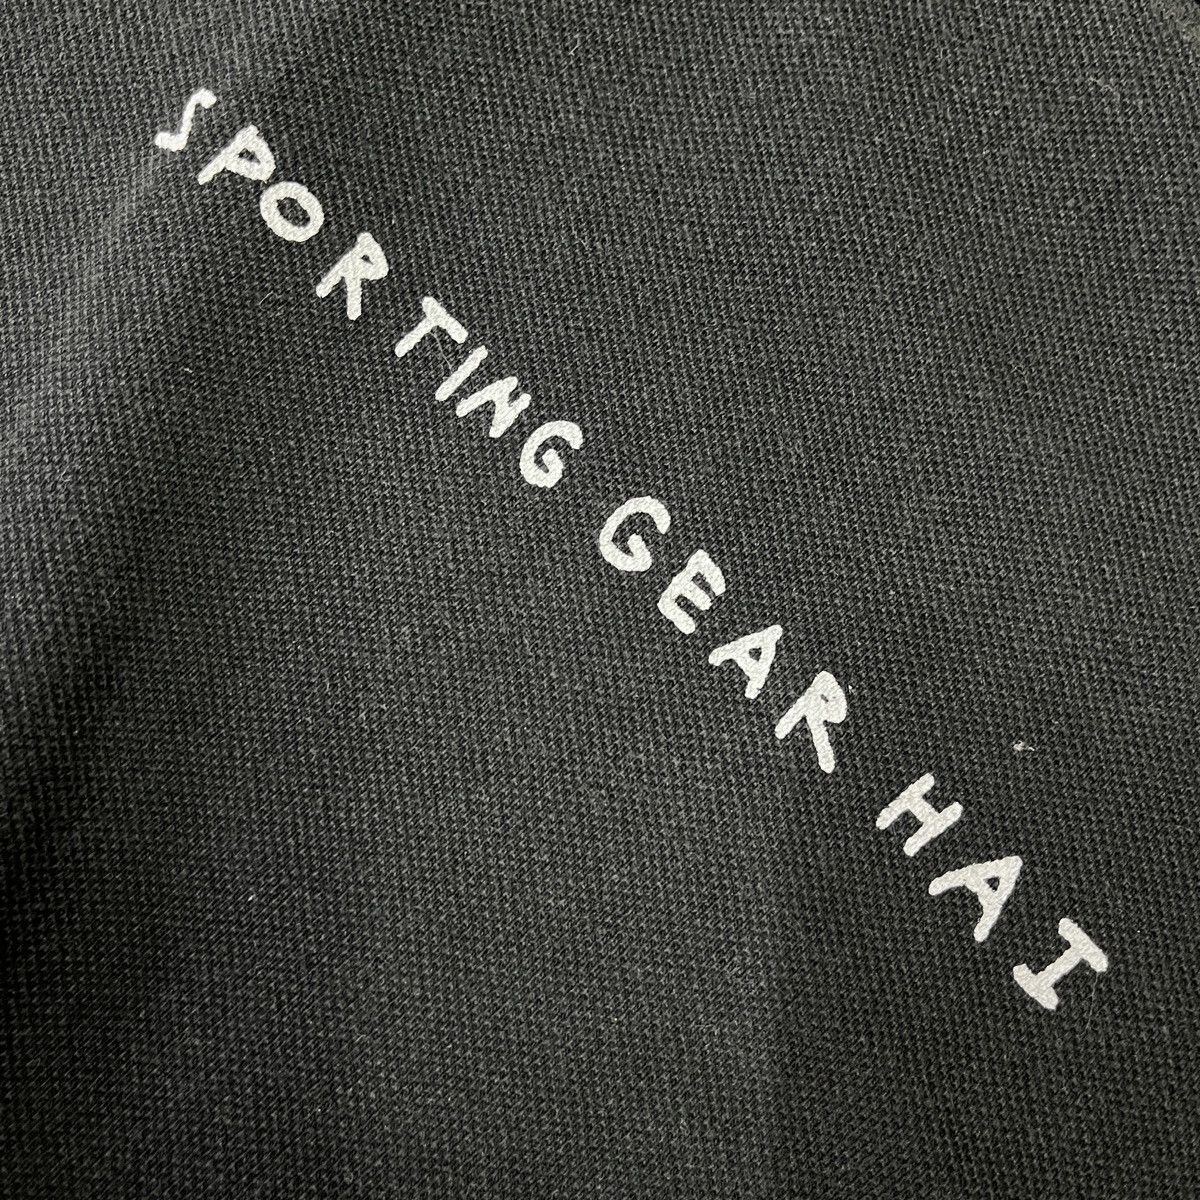 Vintage Hai Sporting Gear Lacoste Cotton TShirt - 4